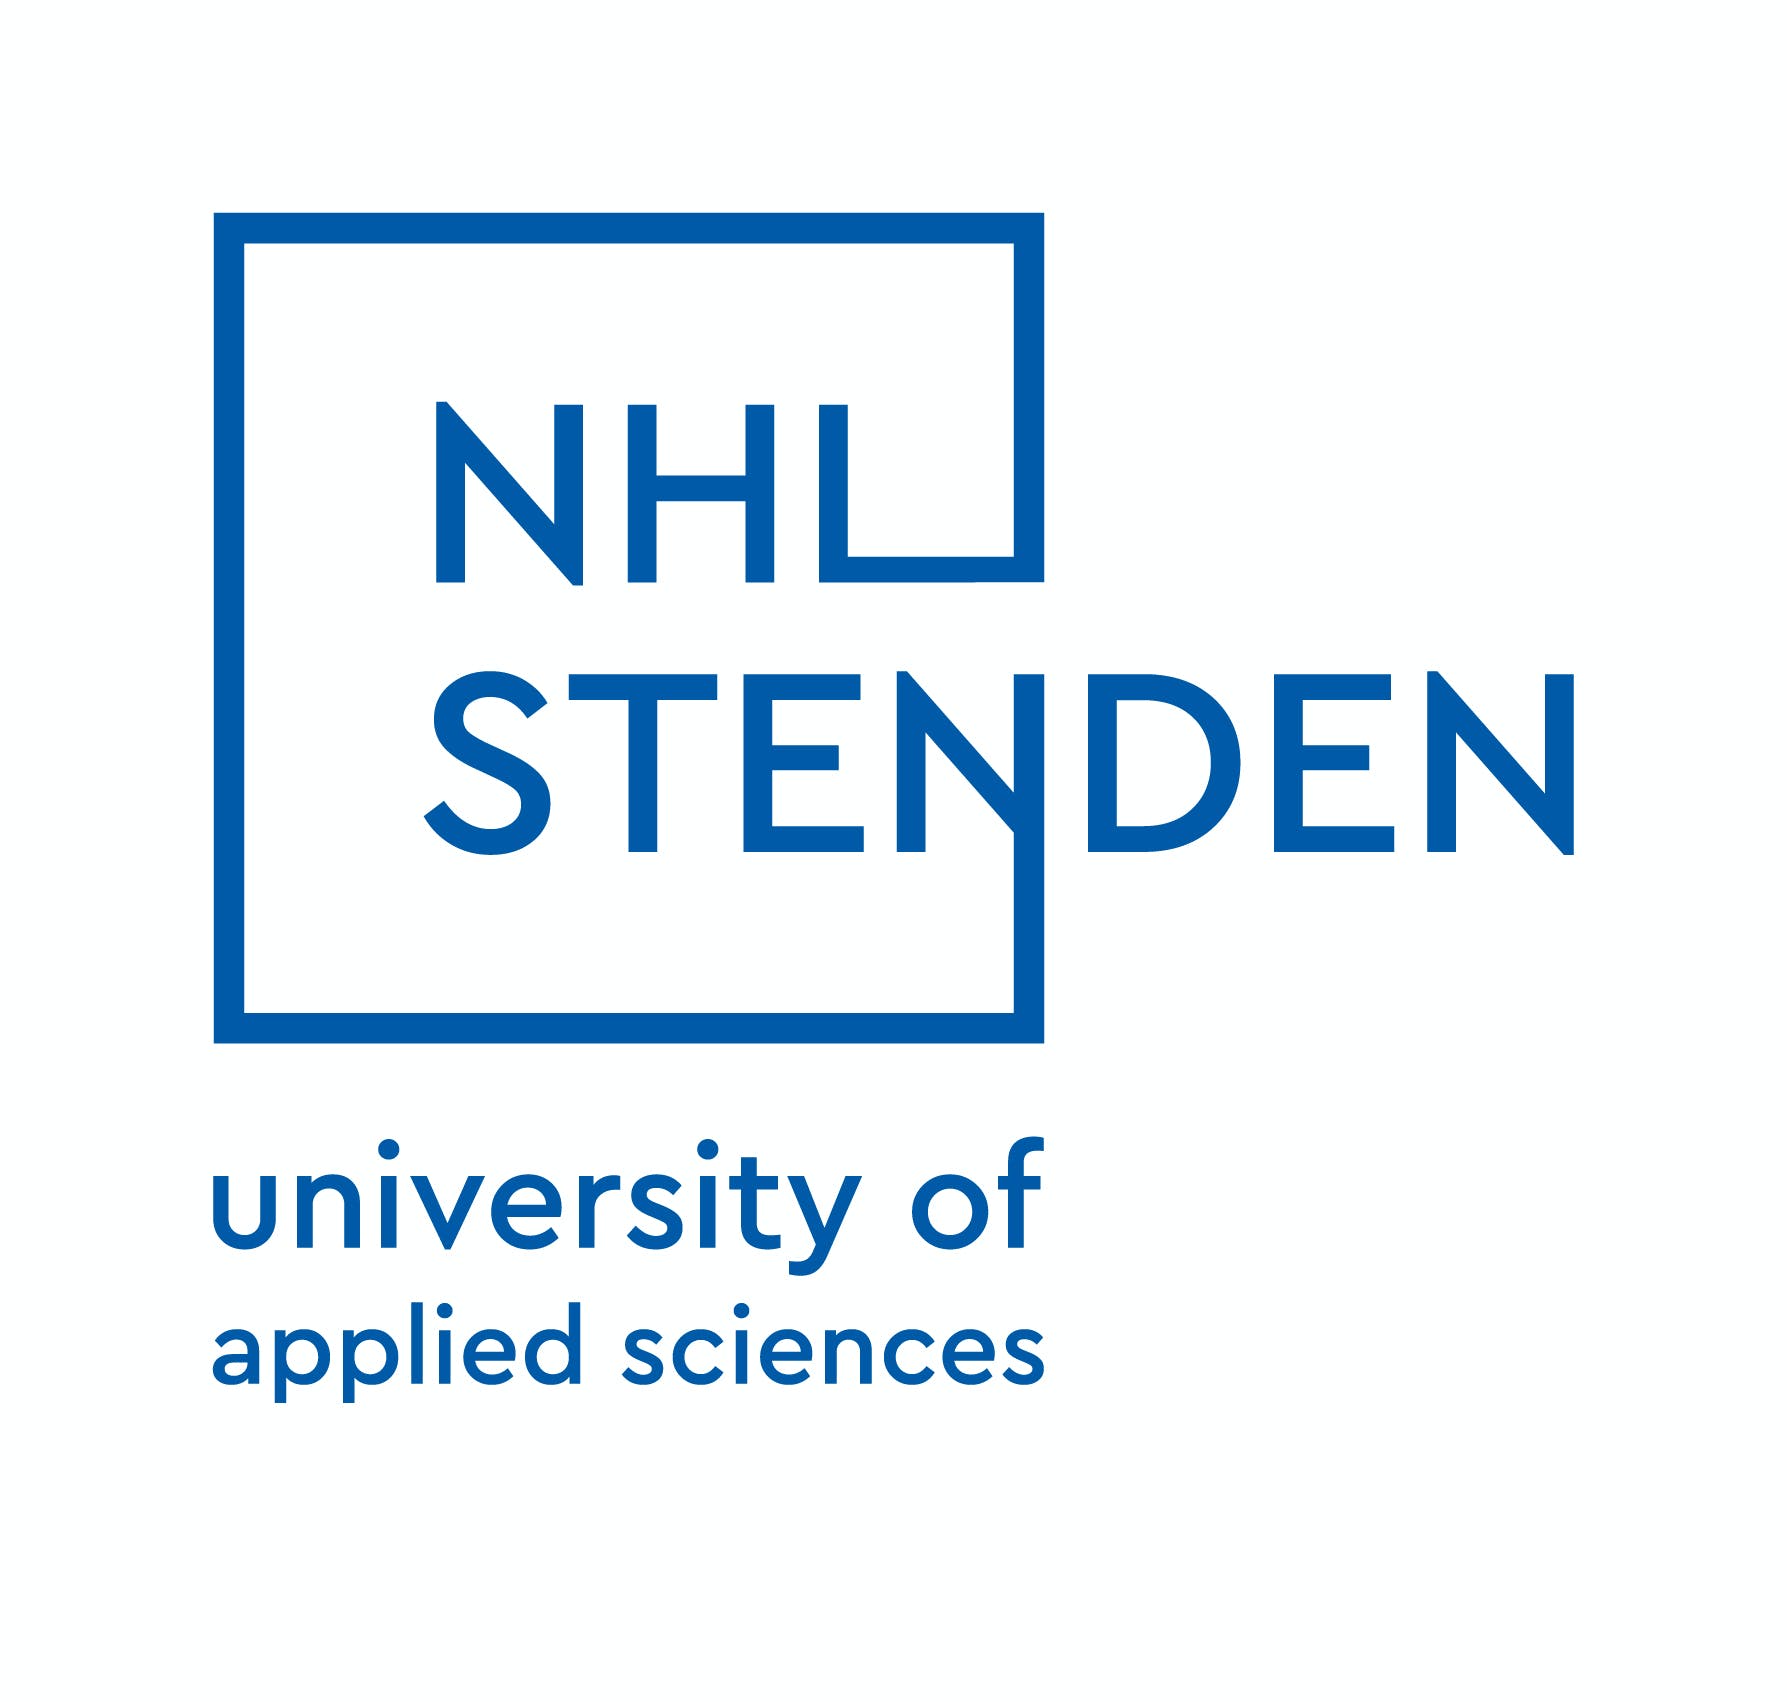 NHL Stenden University of applied sciences logo home blauw